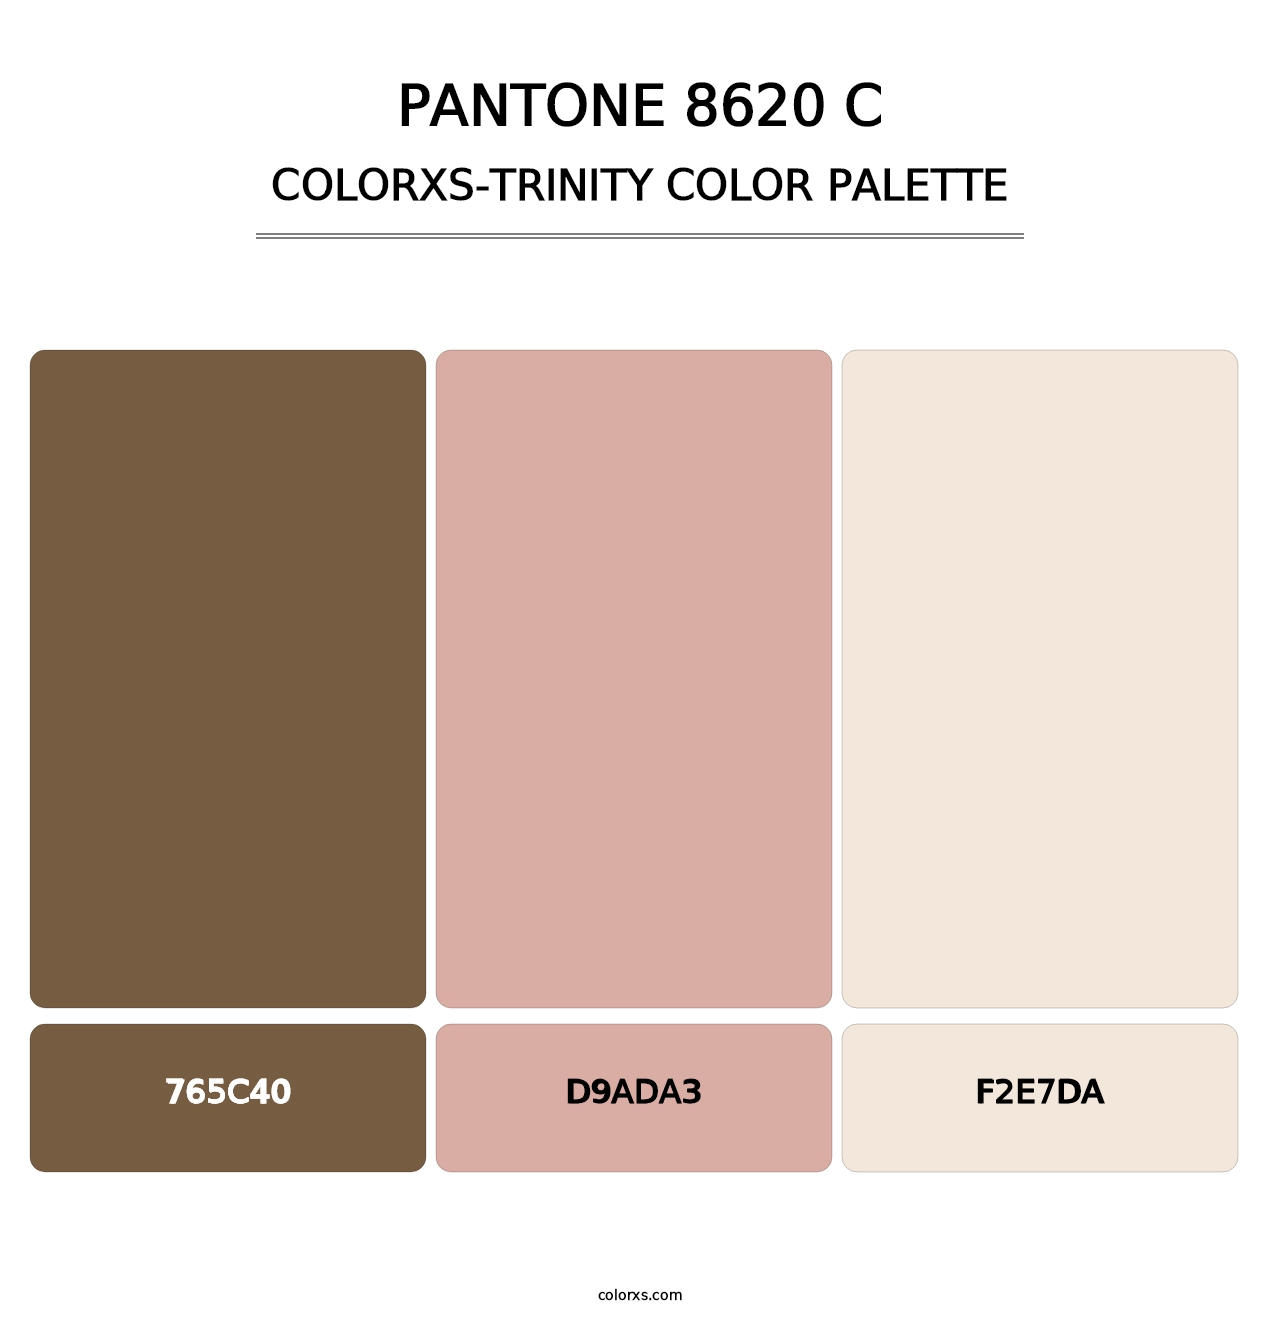 PANTONE 8620 C - Colorxs Trinity Palette